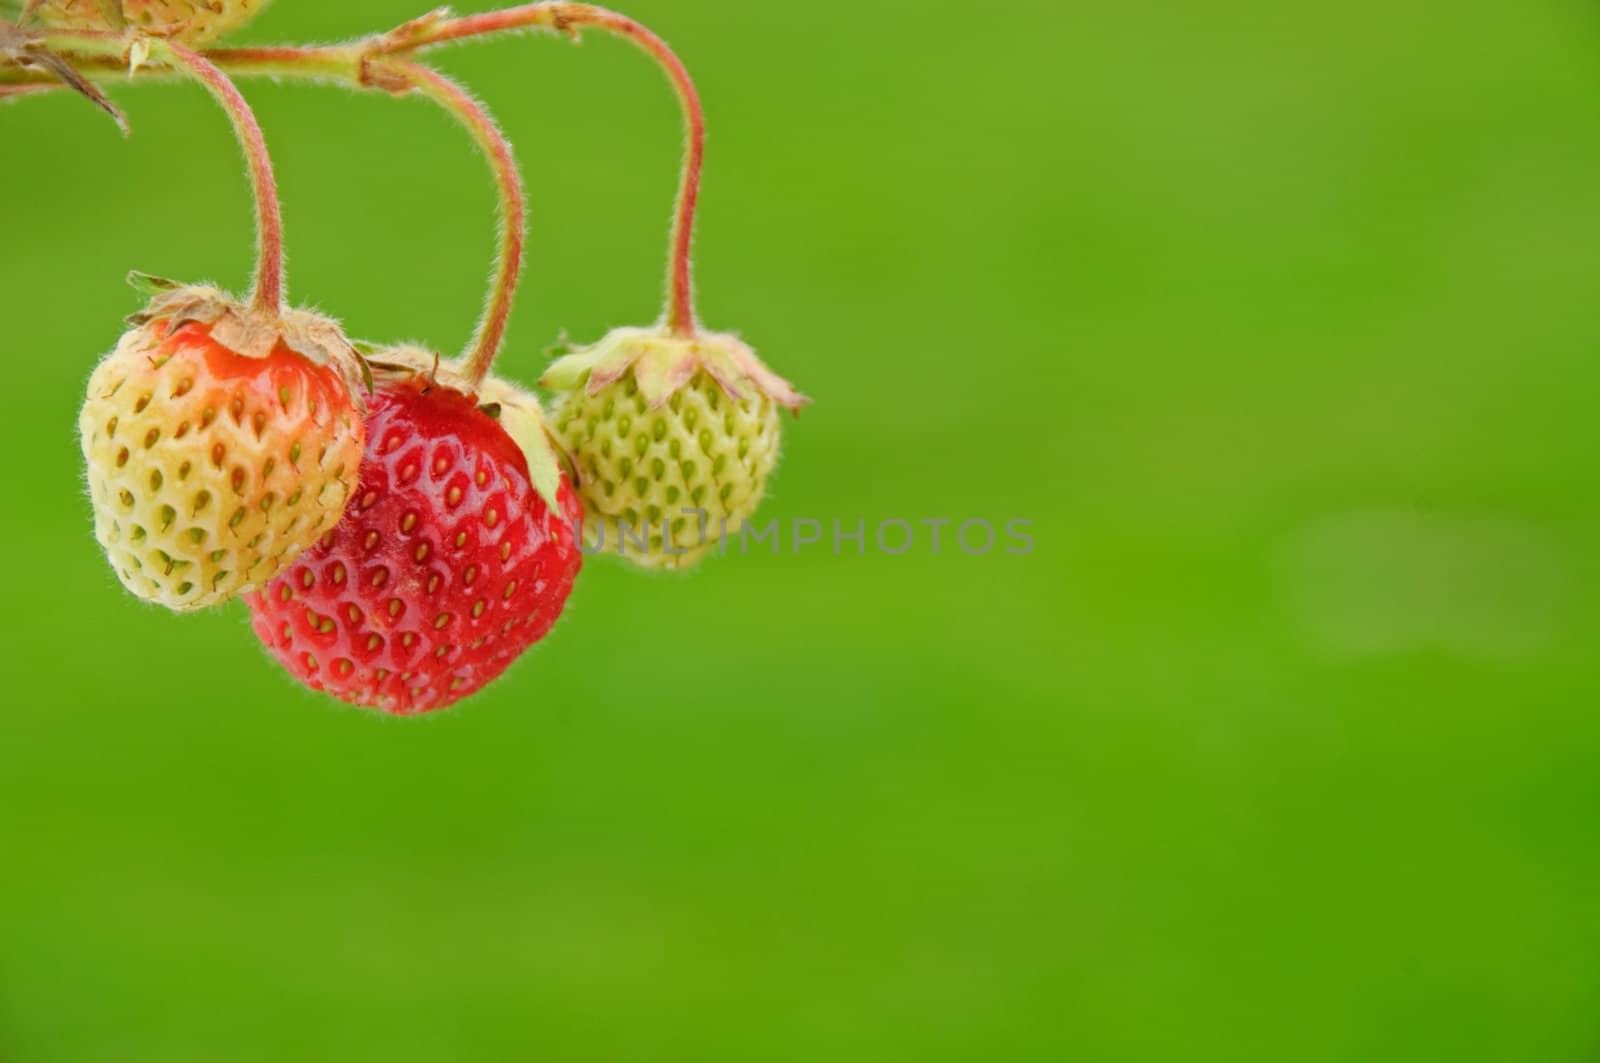 Strawberries by GryT